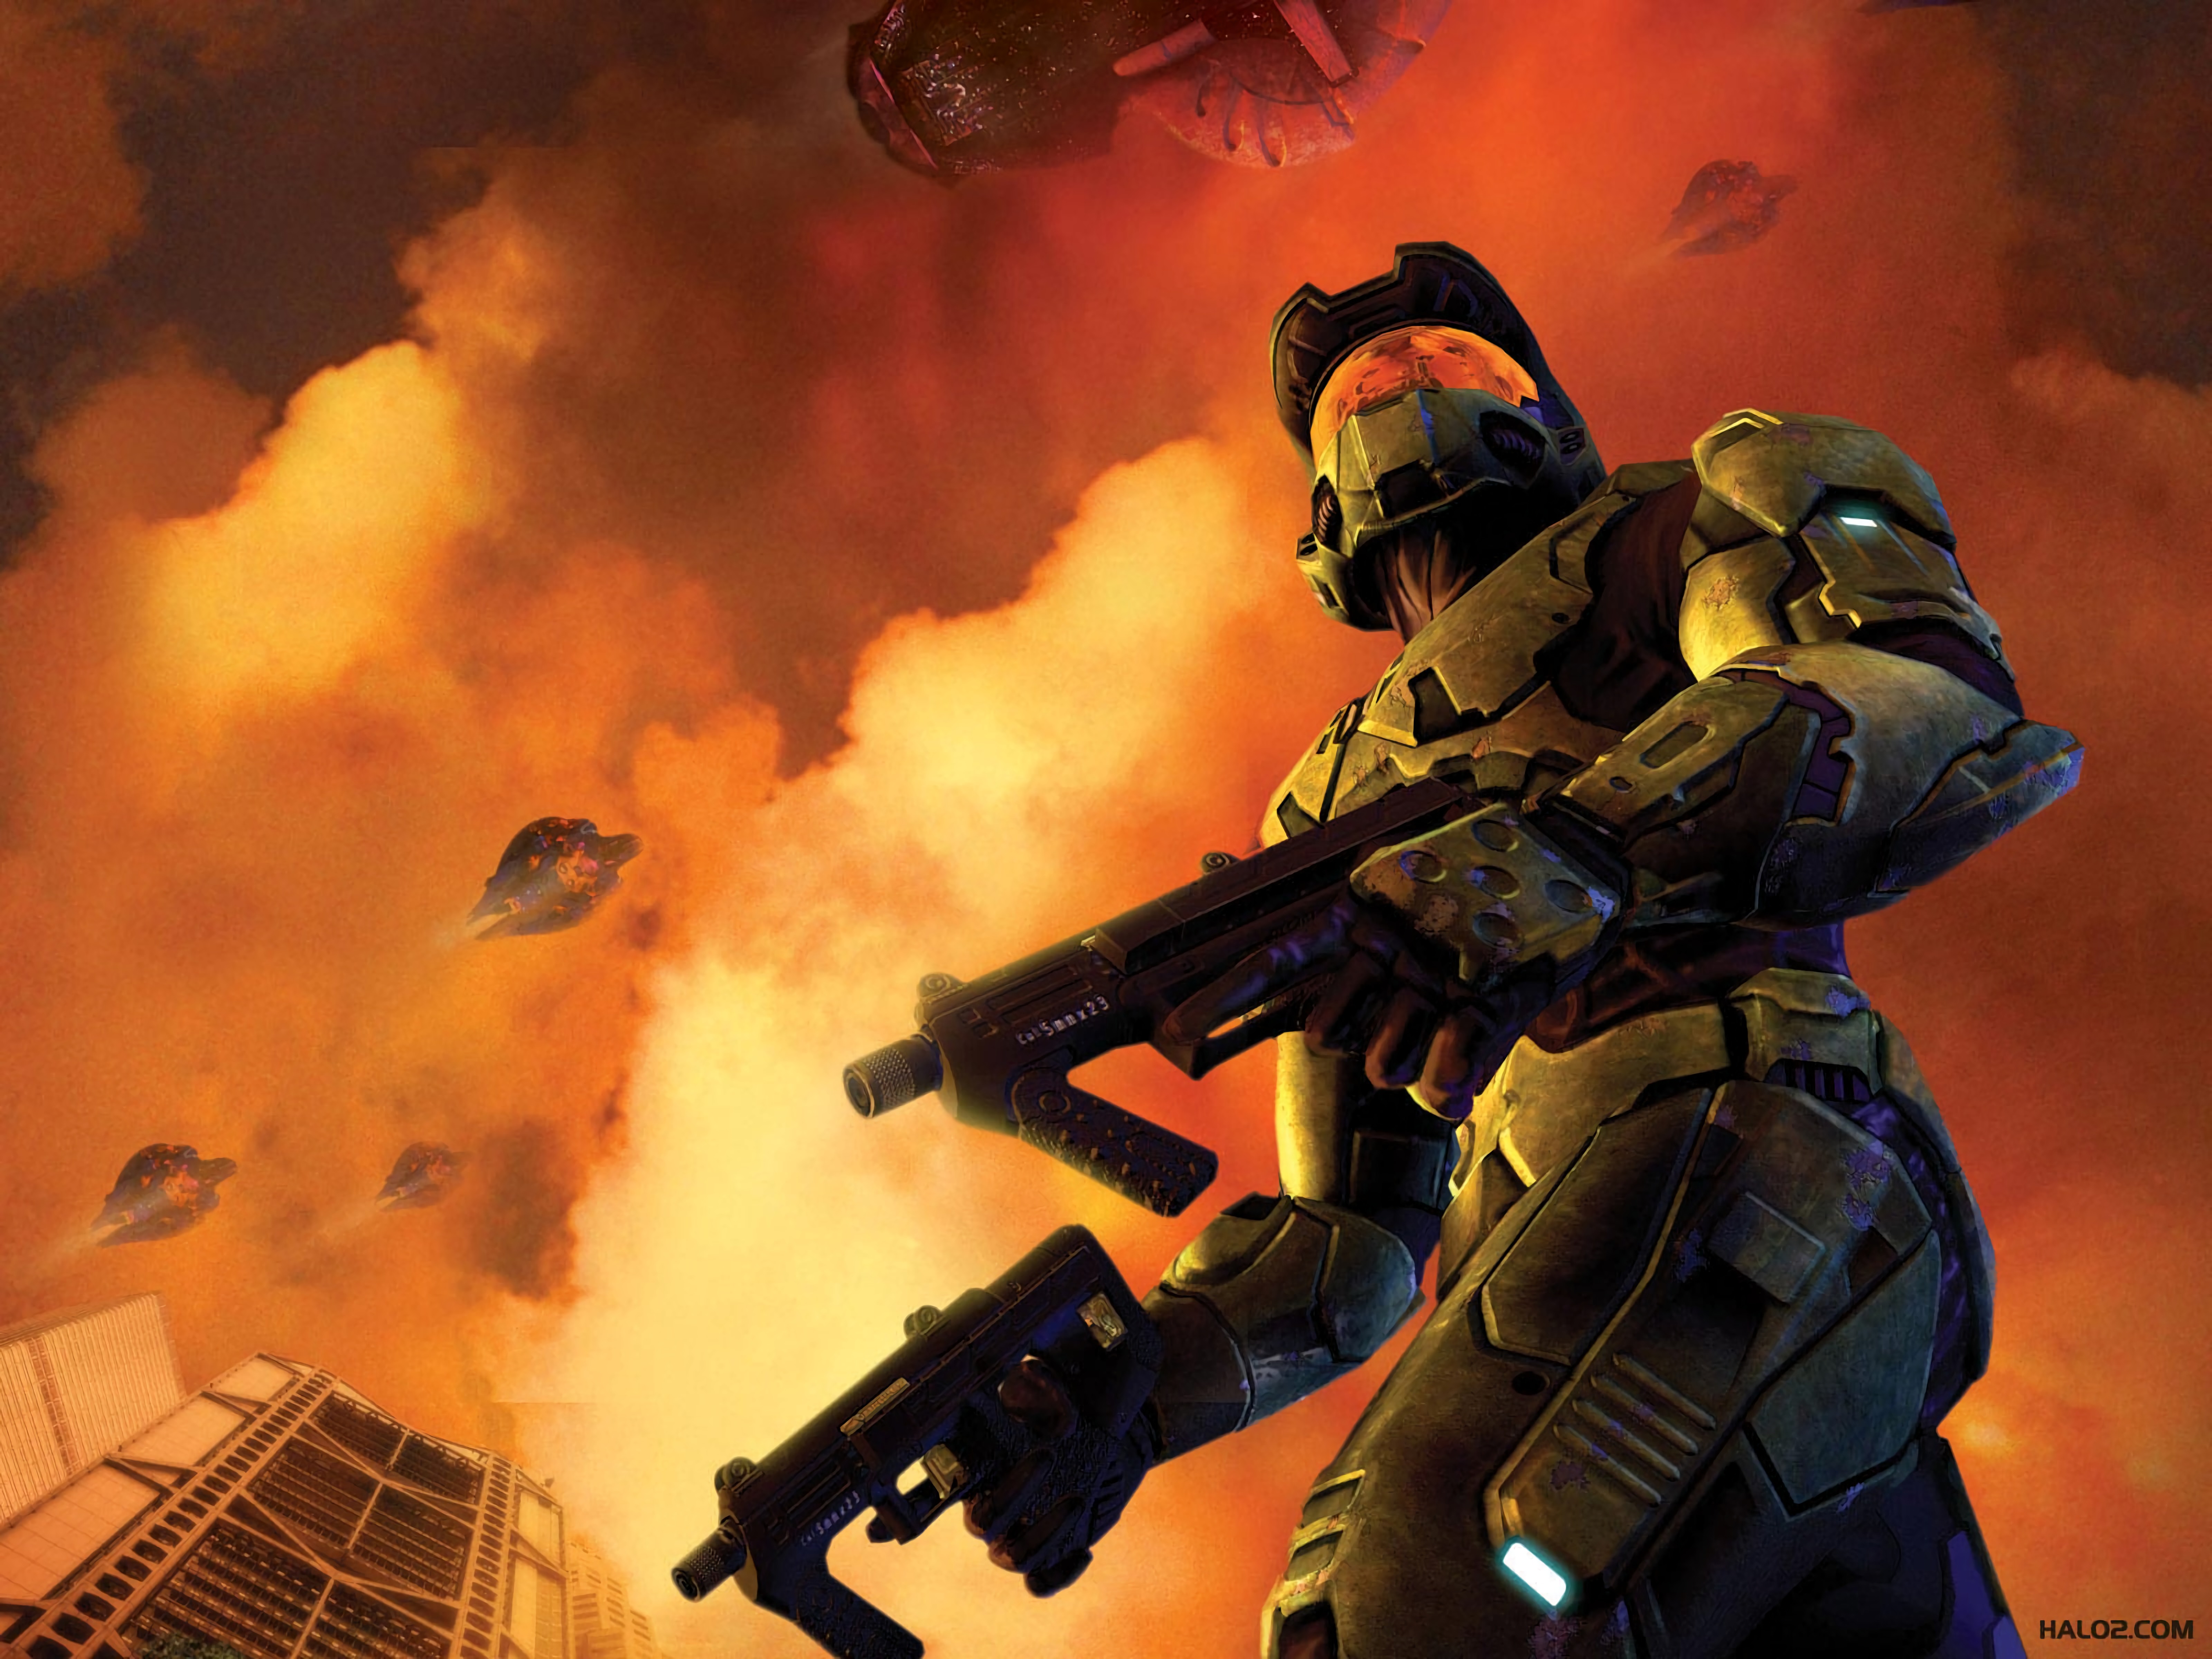 People 6400x4800 Halo 2 Xbox Master Chief (Halo) video games futuristic video game characters futuristic armor